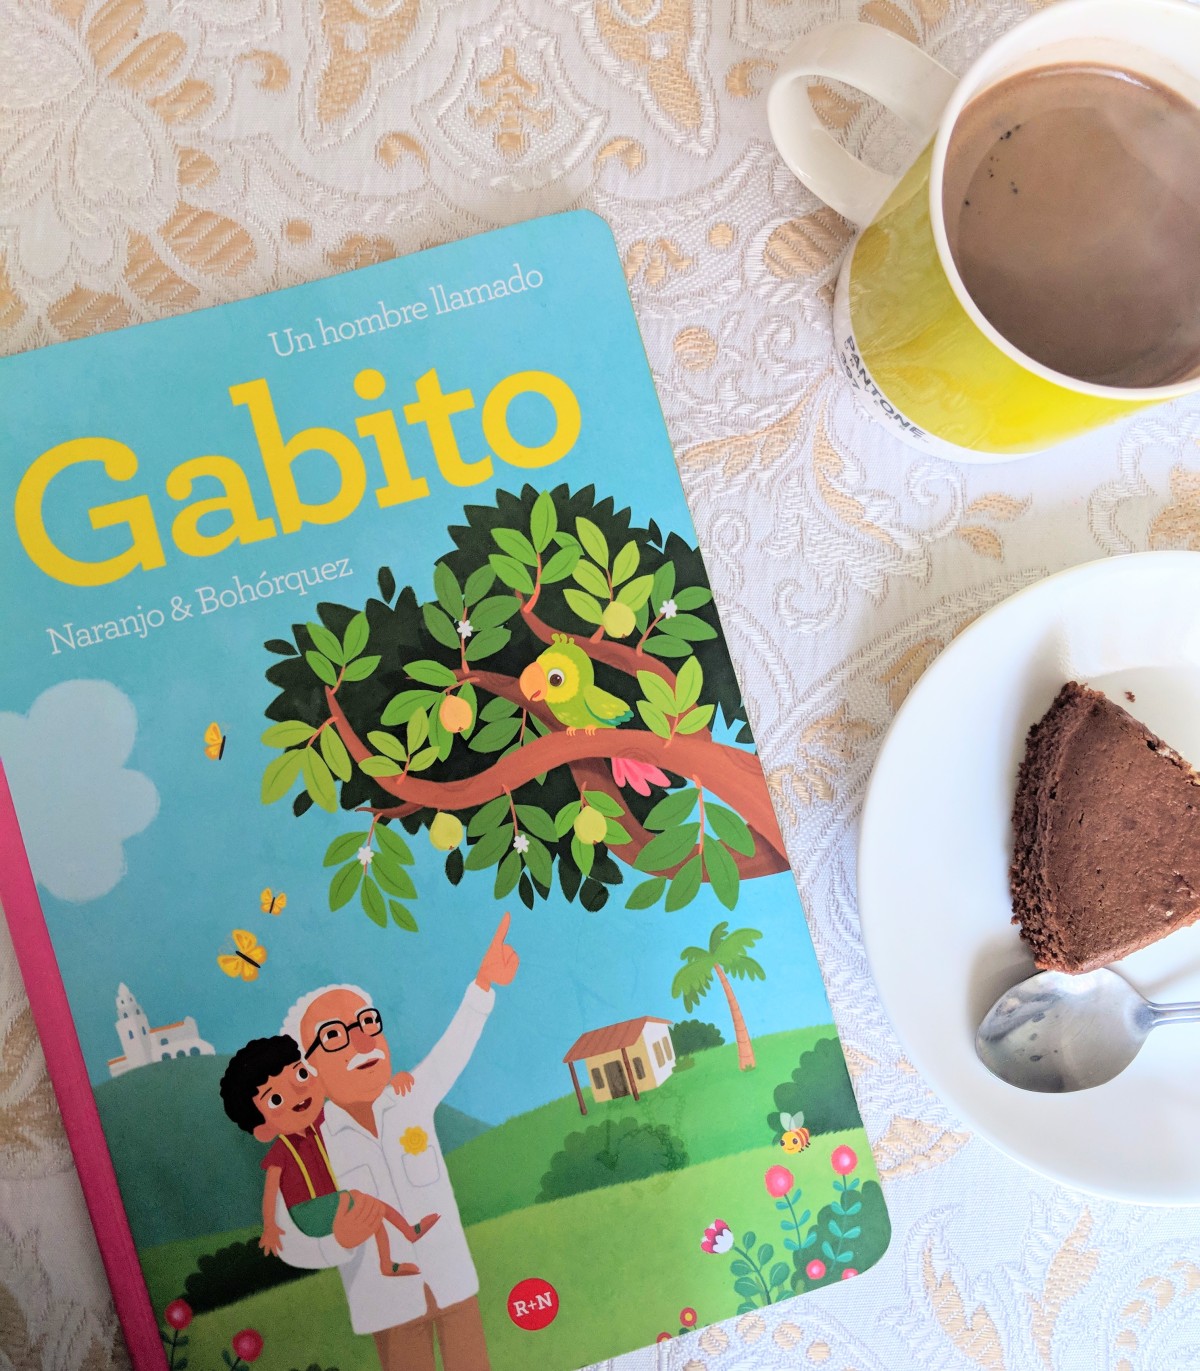 Cinco cosas sobre “Gabito” de John Naranjo y Gisela Bohórquez